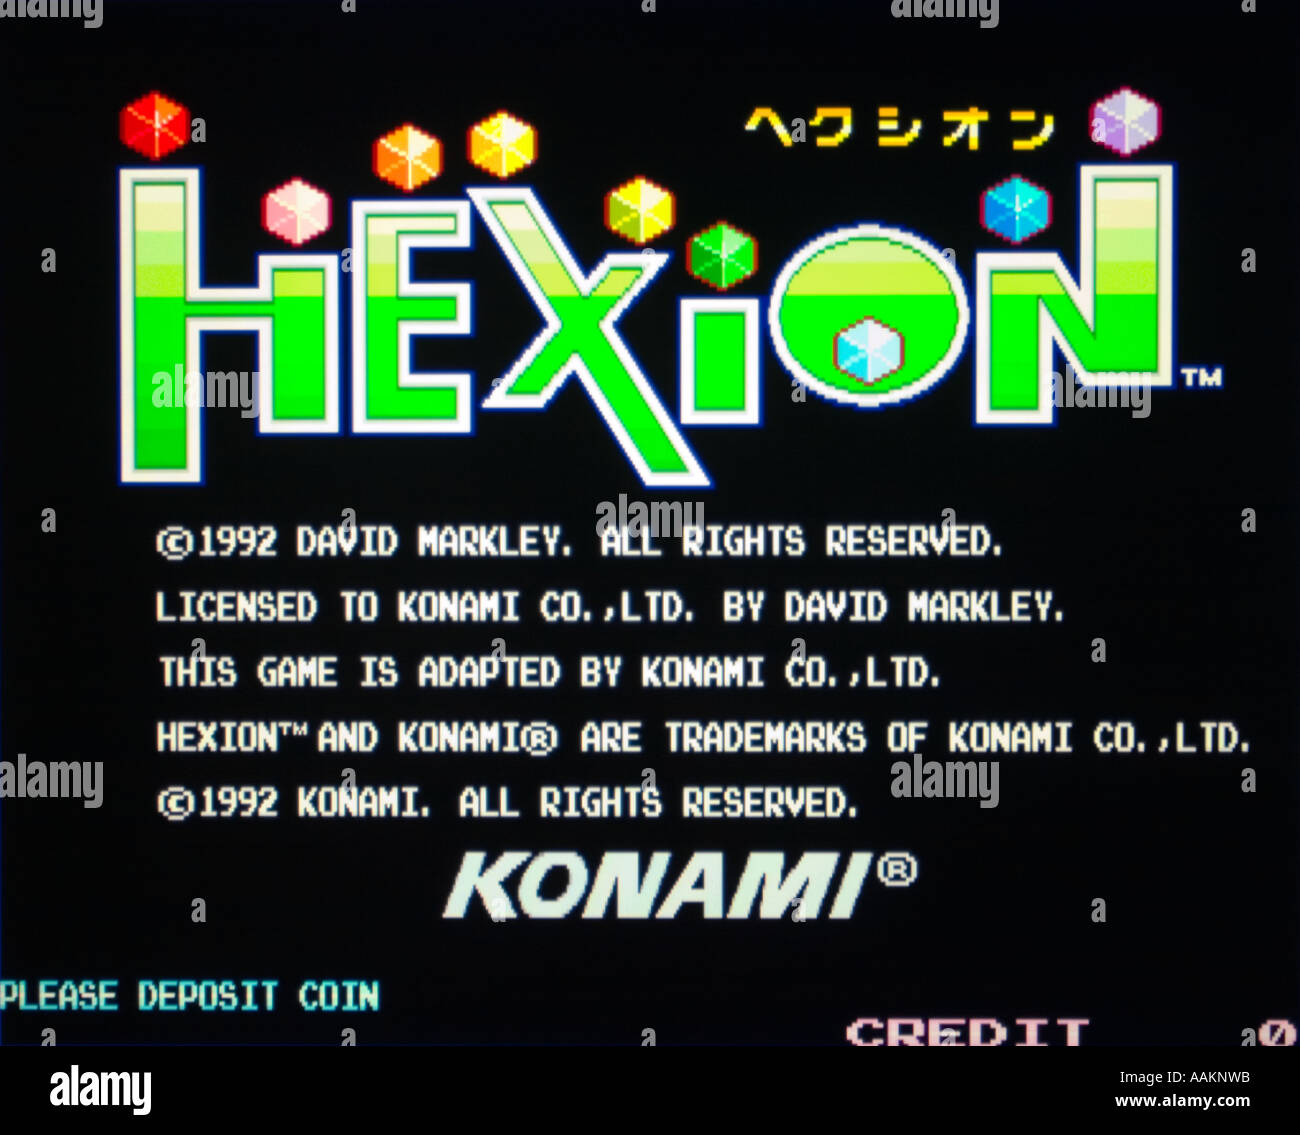 Hexion David Markley Konami 1992 vintage arcade videogame screenshot - EDITORIAL USE ONLY Stock Photo